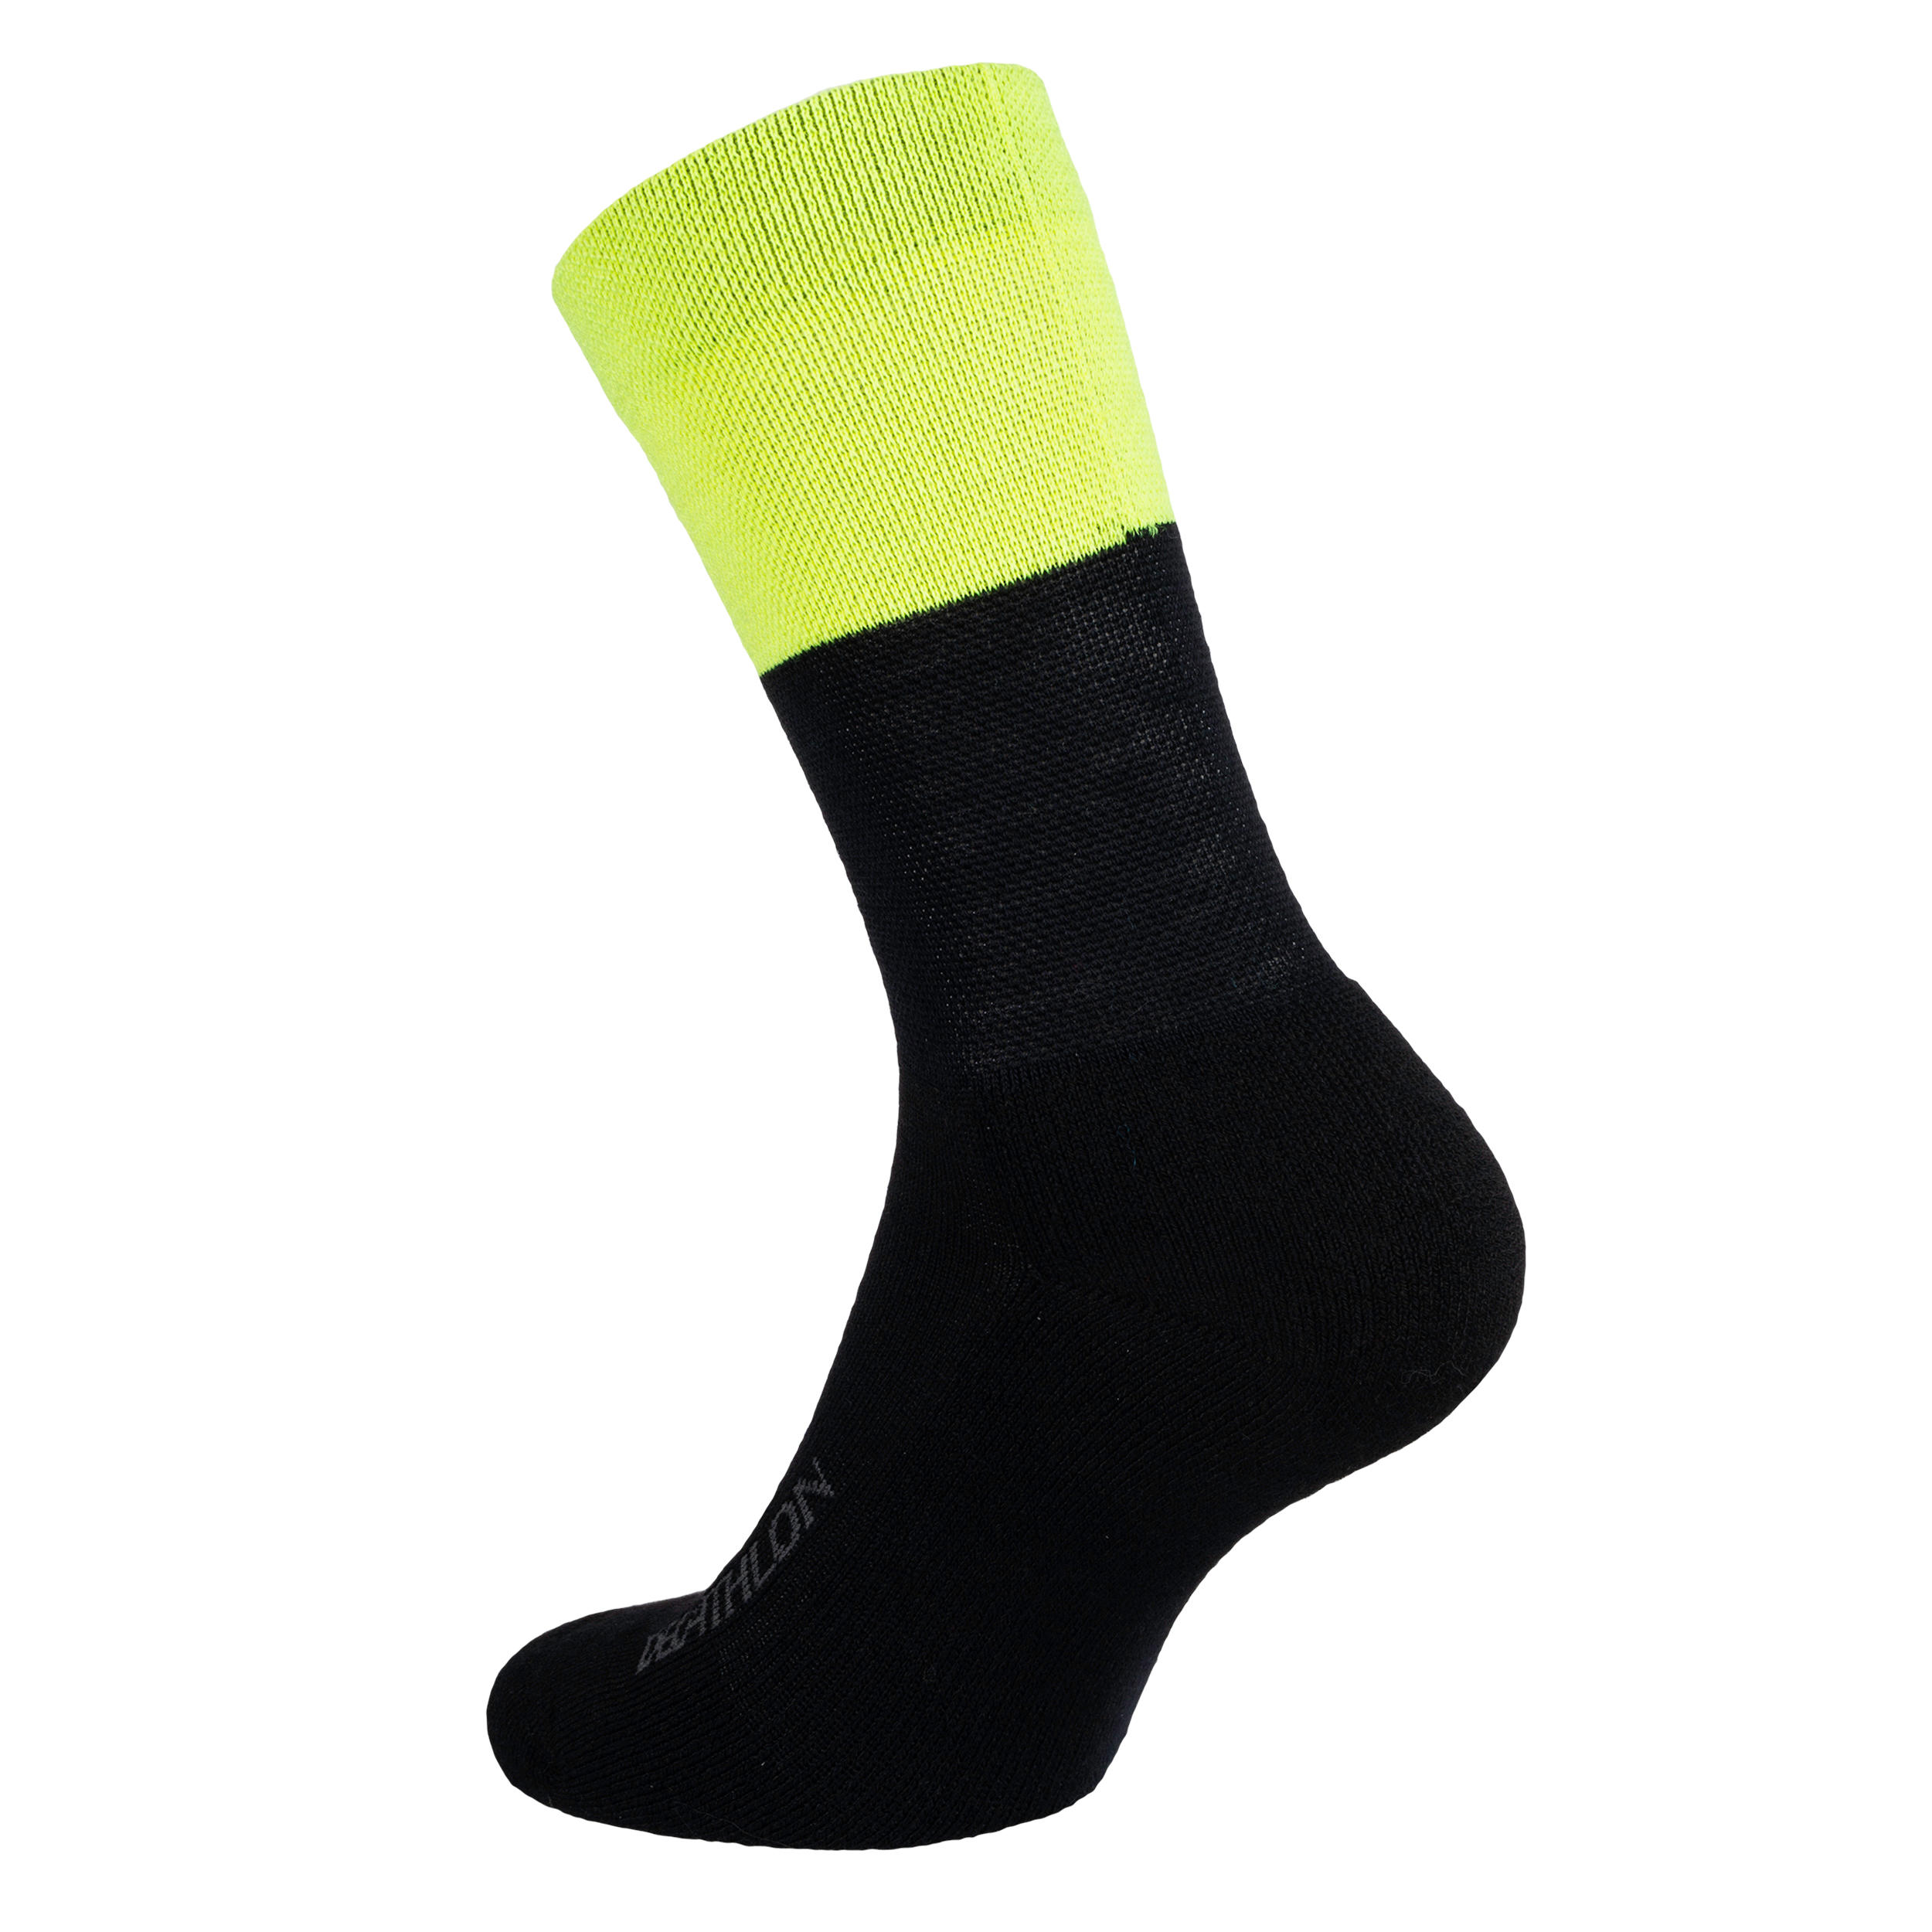 500 Winter Cycling Socks - Black/Neon Yellow 2/3